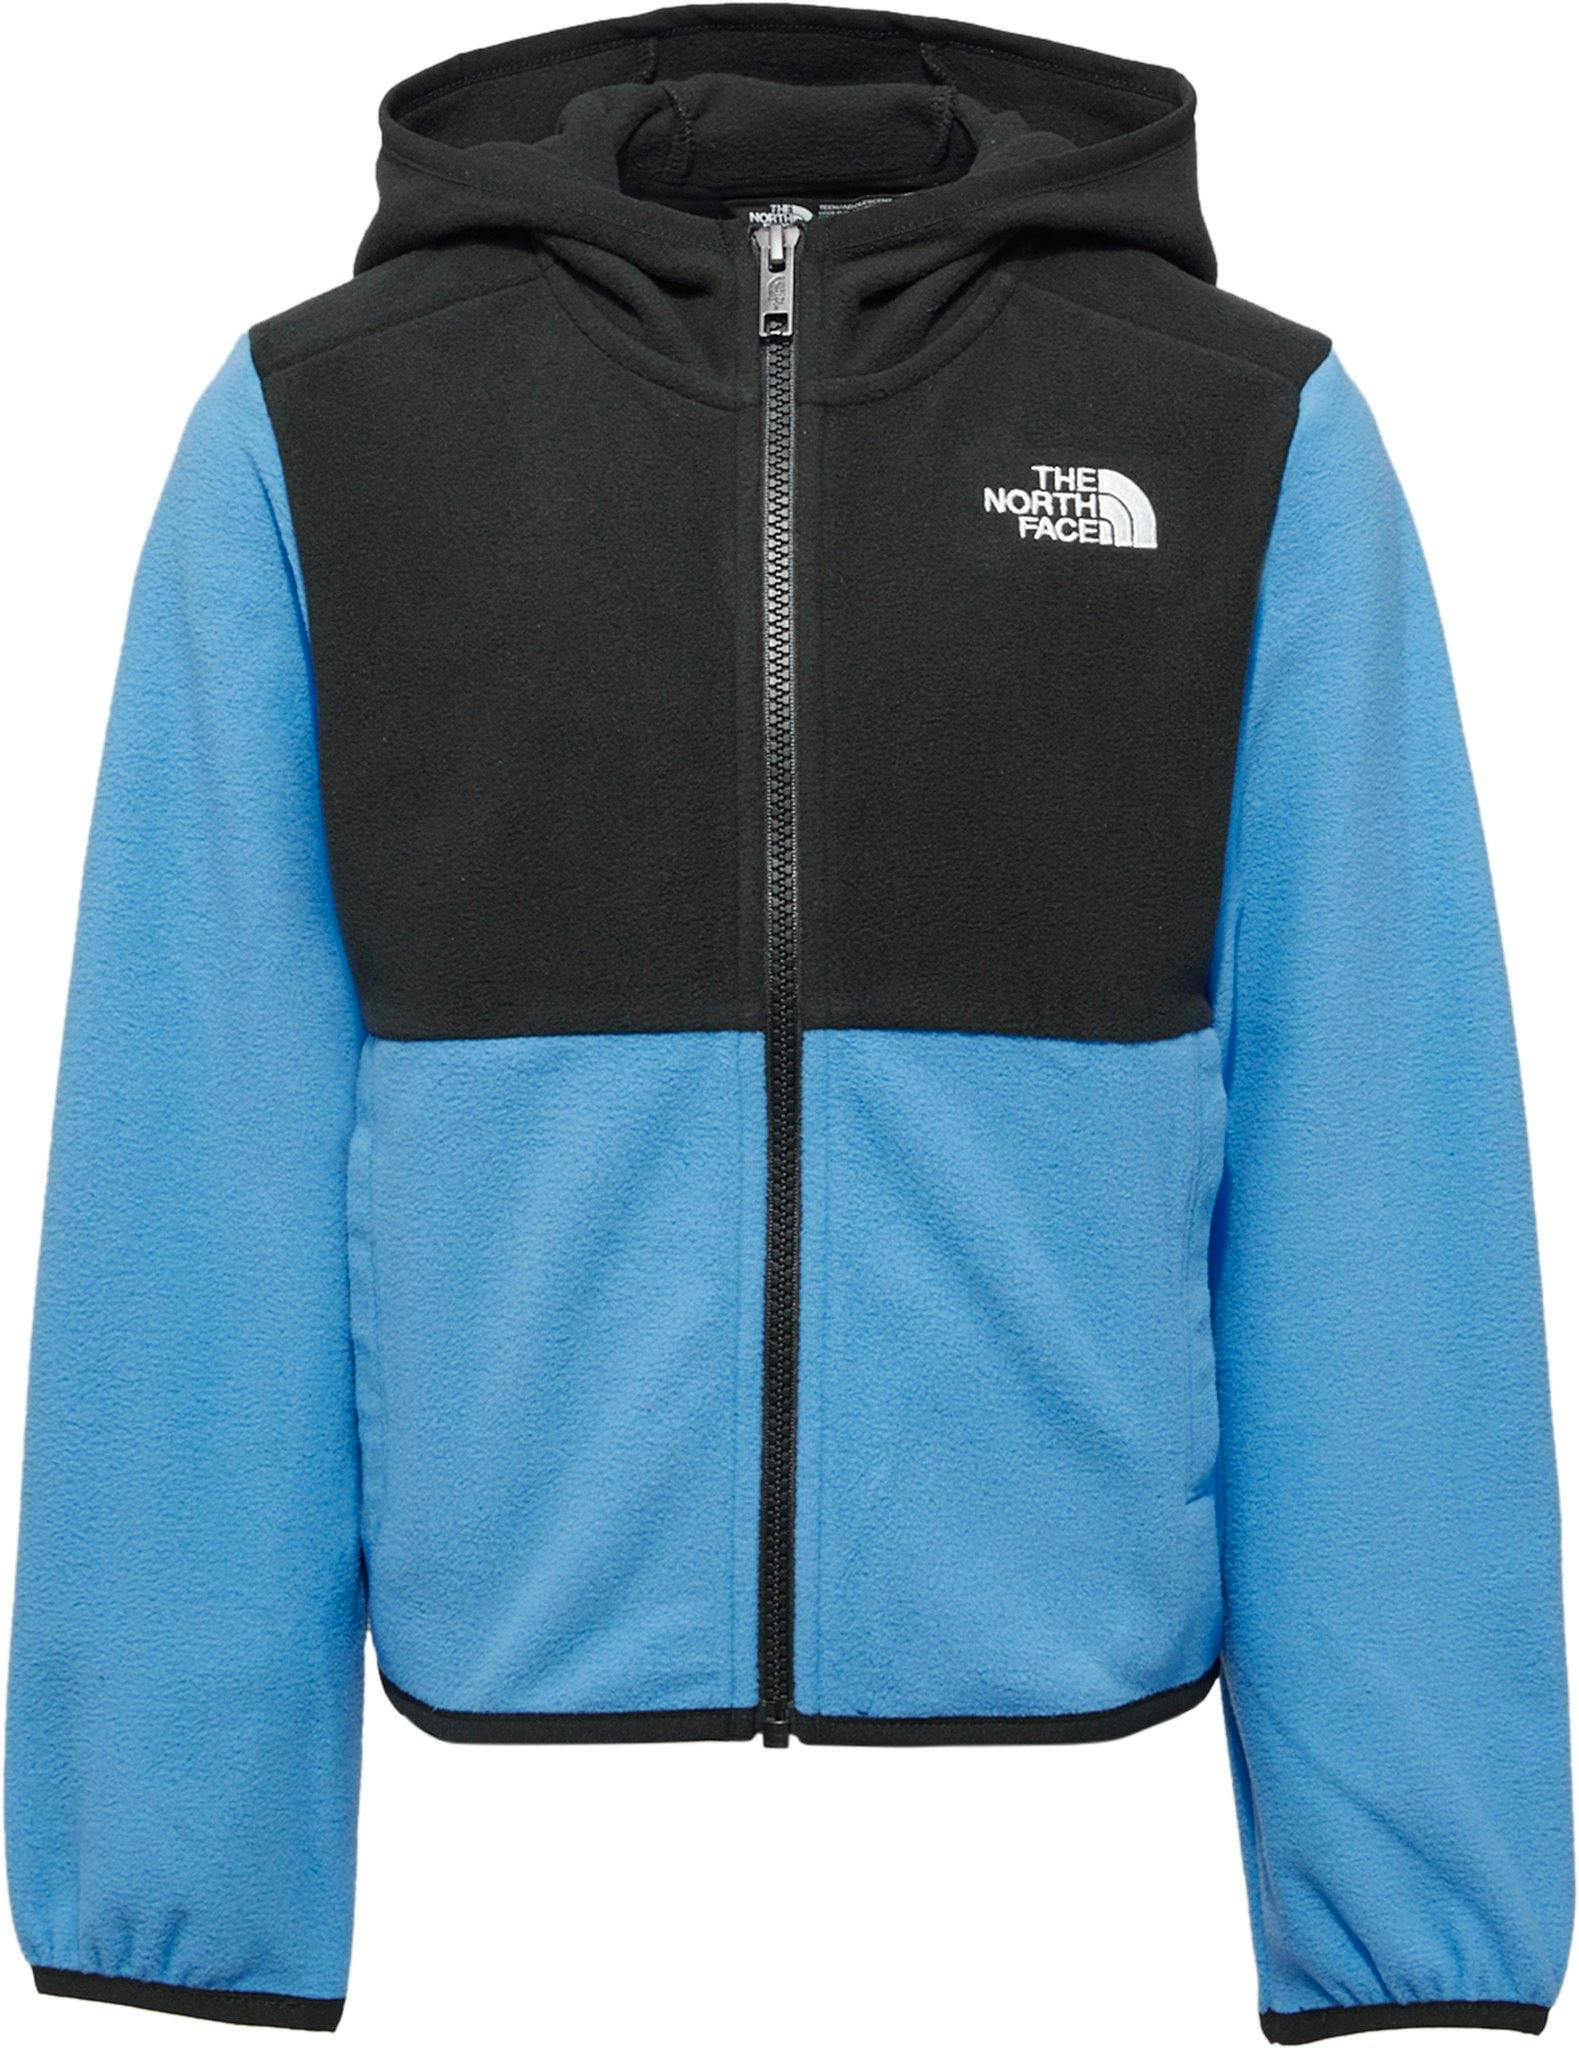 Product image for Glacier Full-Zip Hooded Jacket - Big Kids